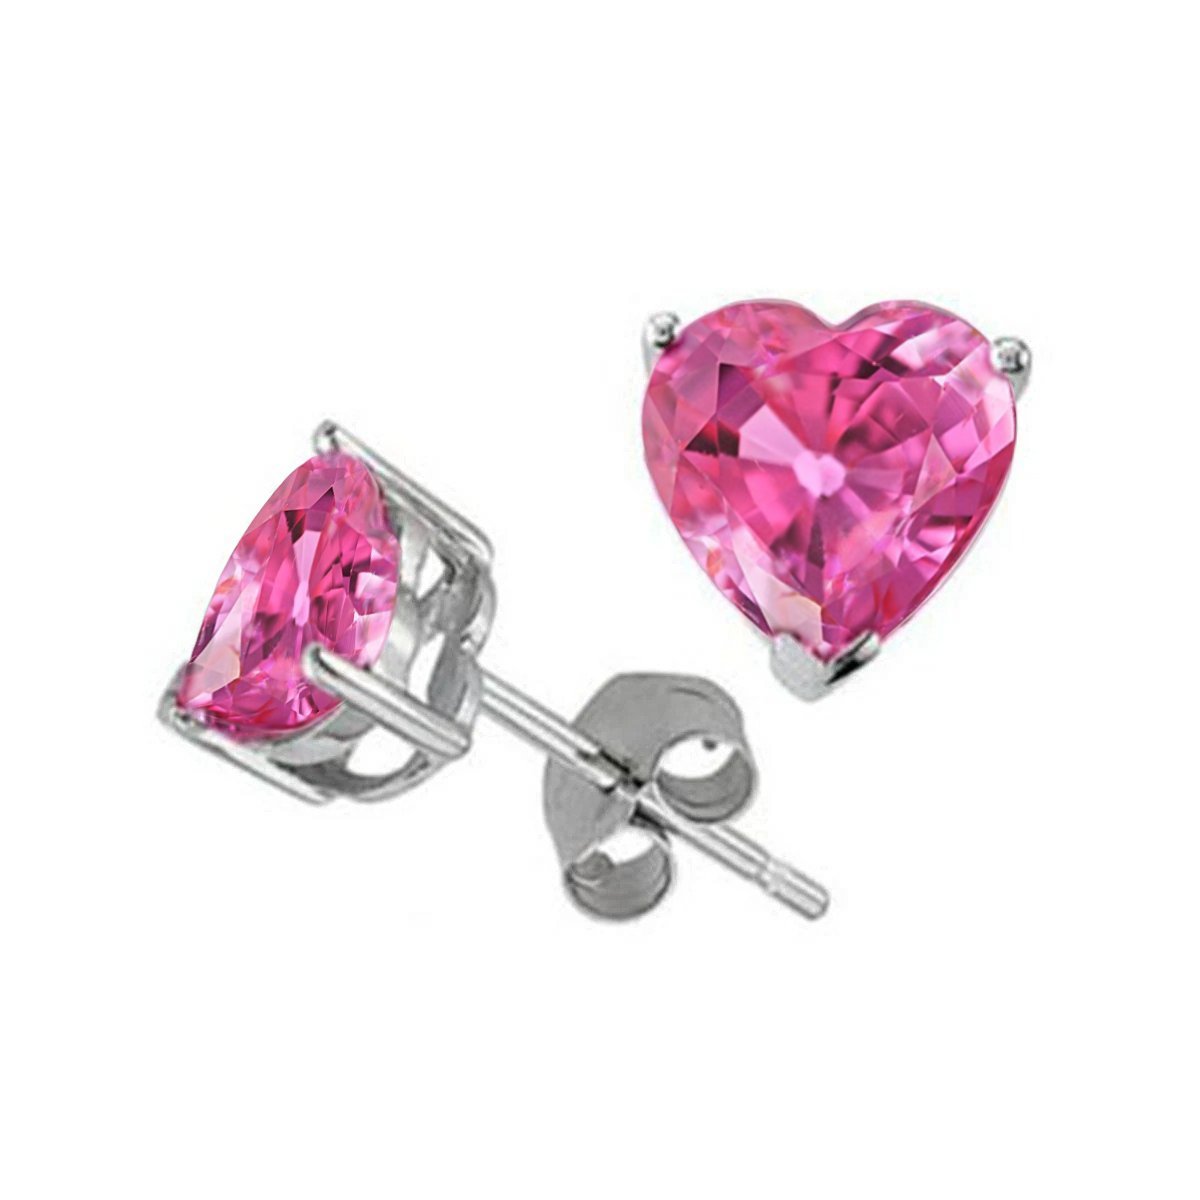 Harry Chad Enterprises 65132 14K White Gold 3 CT Heart Shape Pink Sapphire Stud Earrings